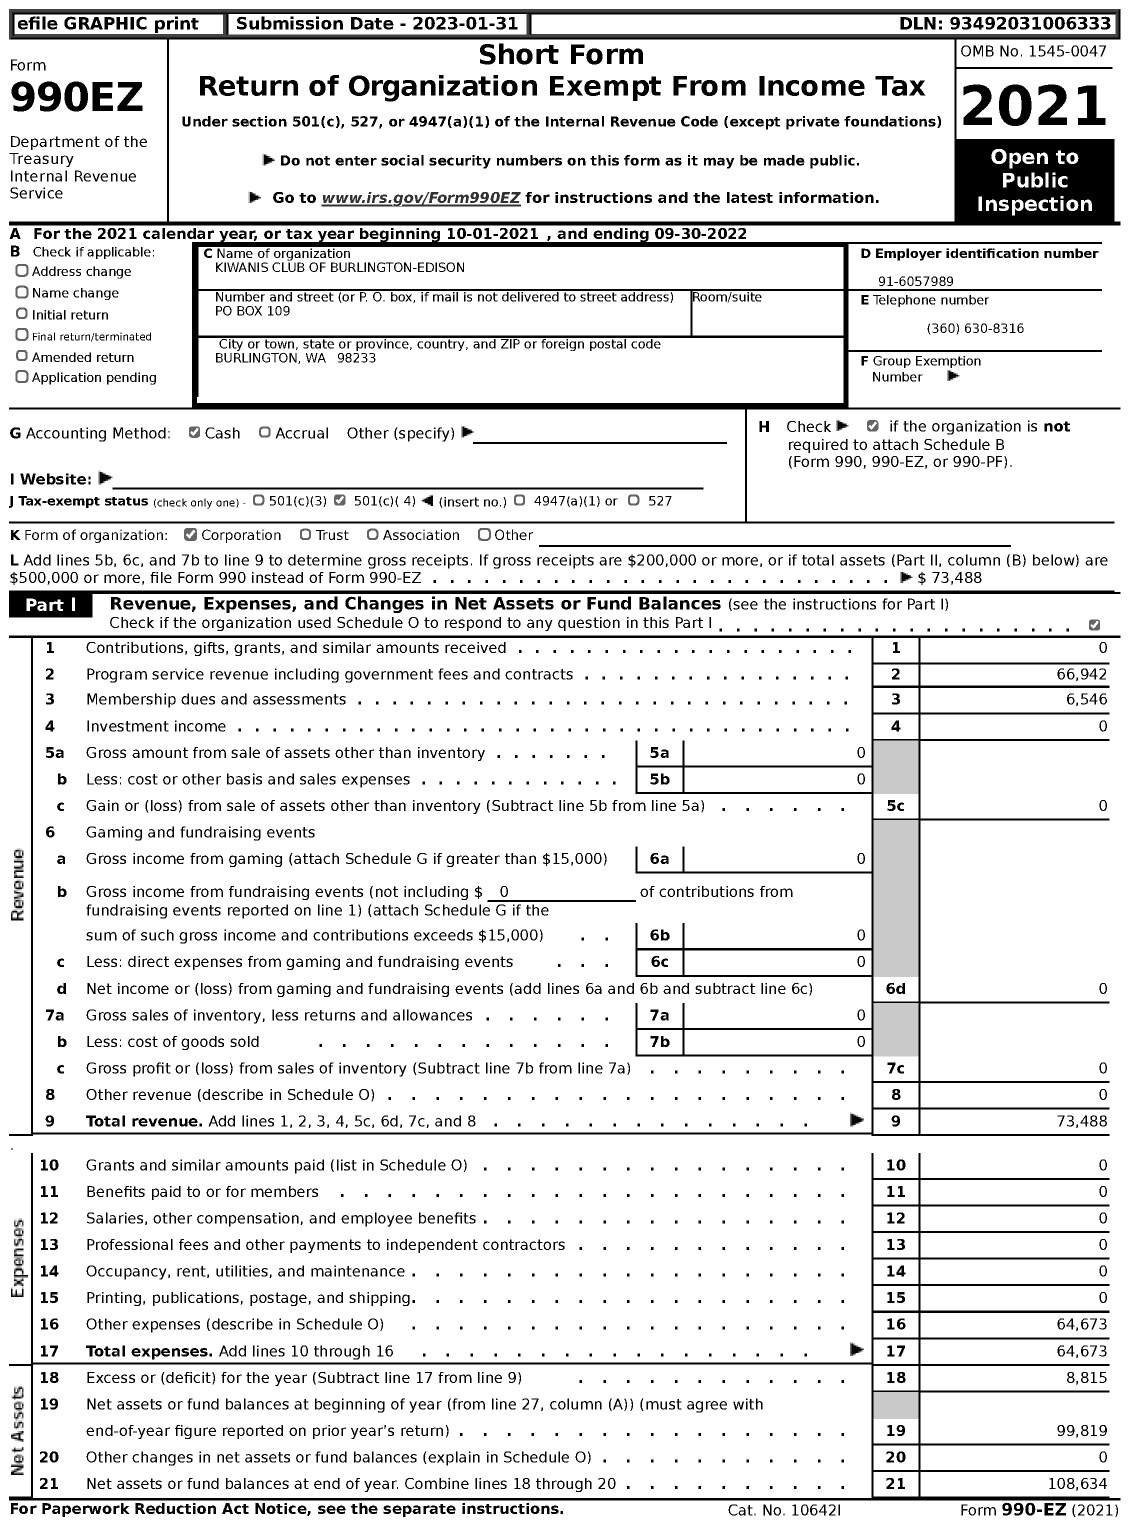 Image of first page of 2021 Form 990EZ for Kiwanis International - K03229 Burlington-Edison